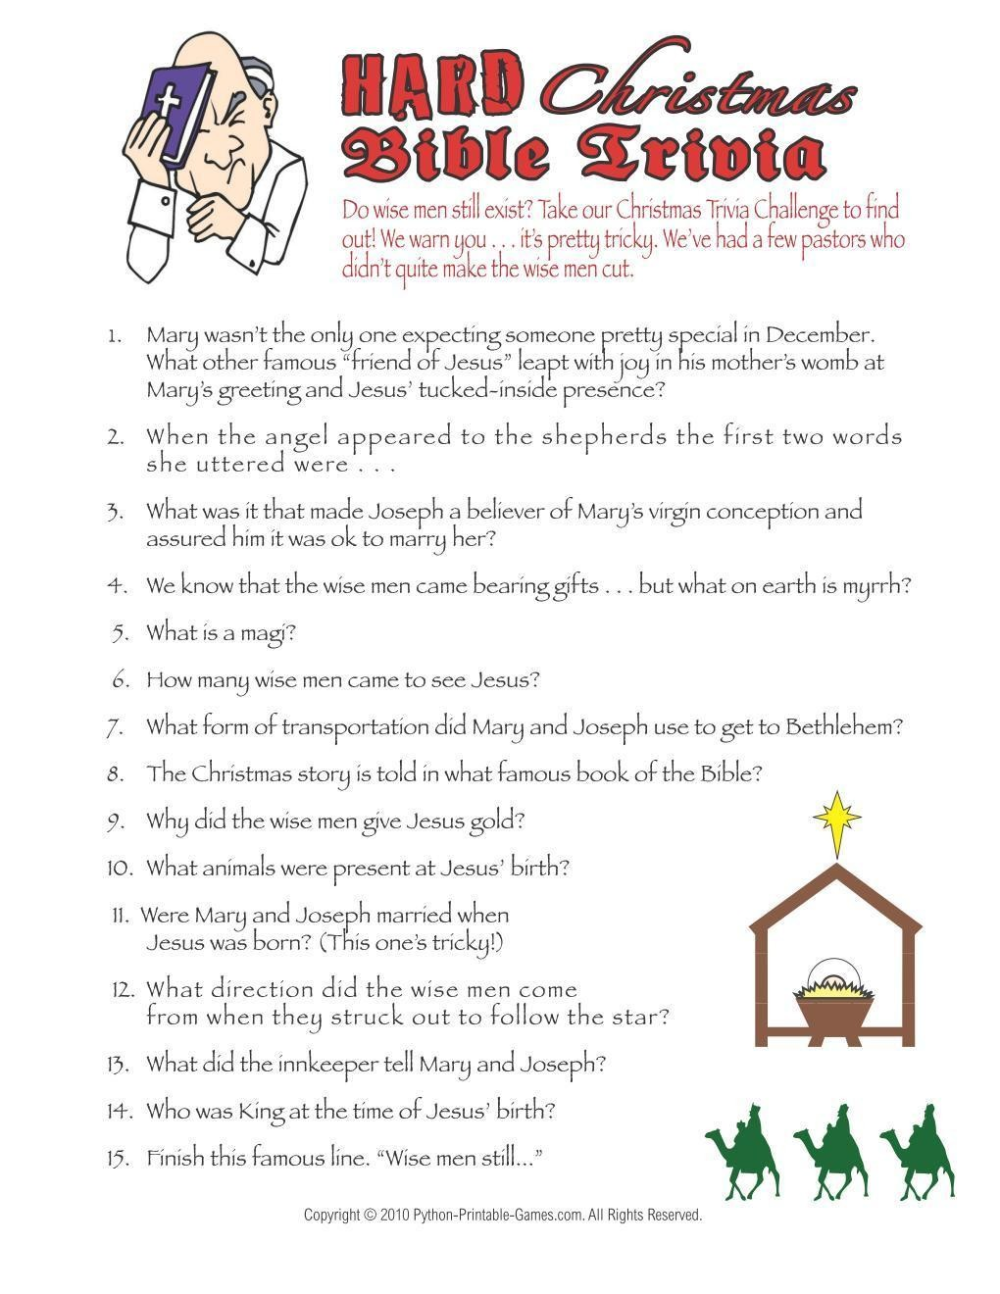 Hard Christmas Trivia Questions